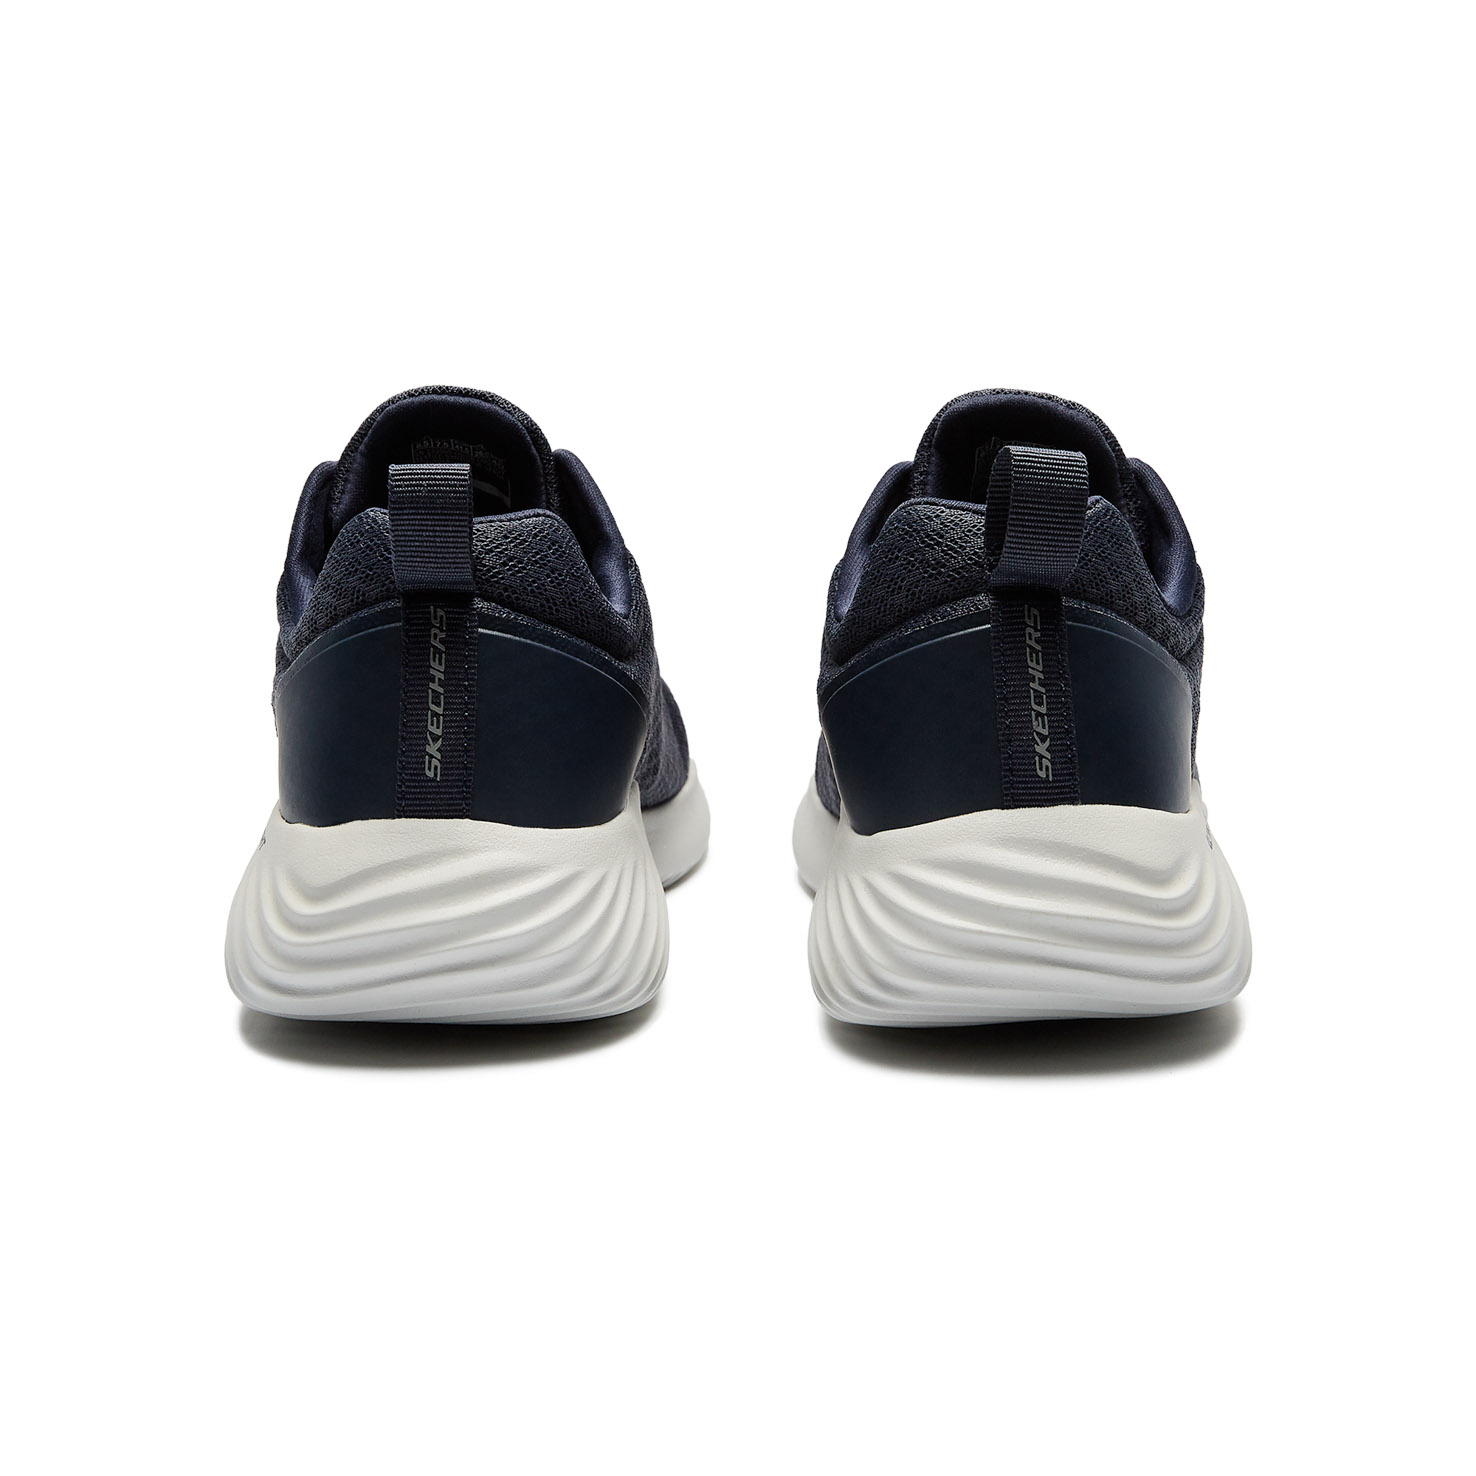 Men's low shoes SKECHERS, размер 41.5, цвет черный SK232005 - фото 4